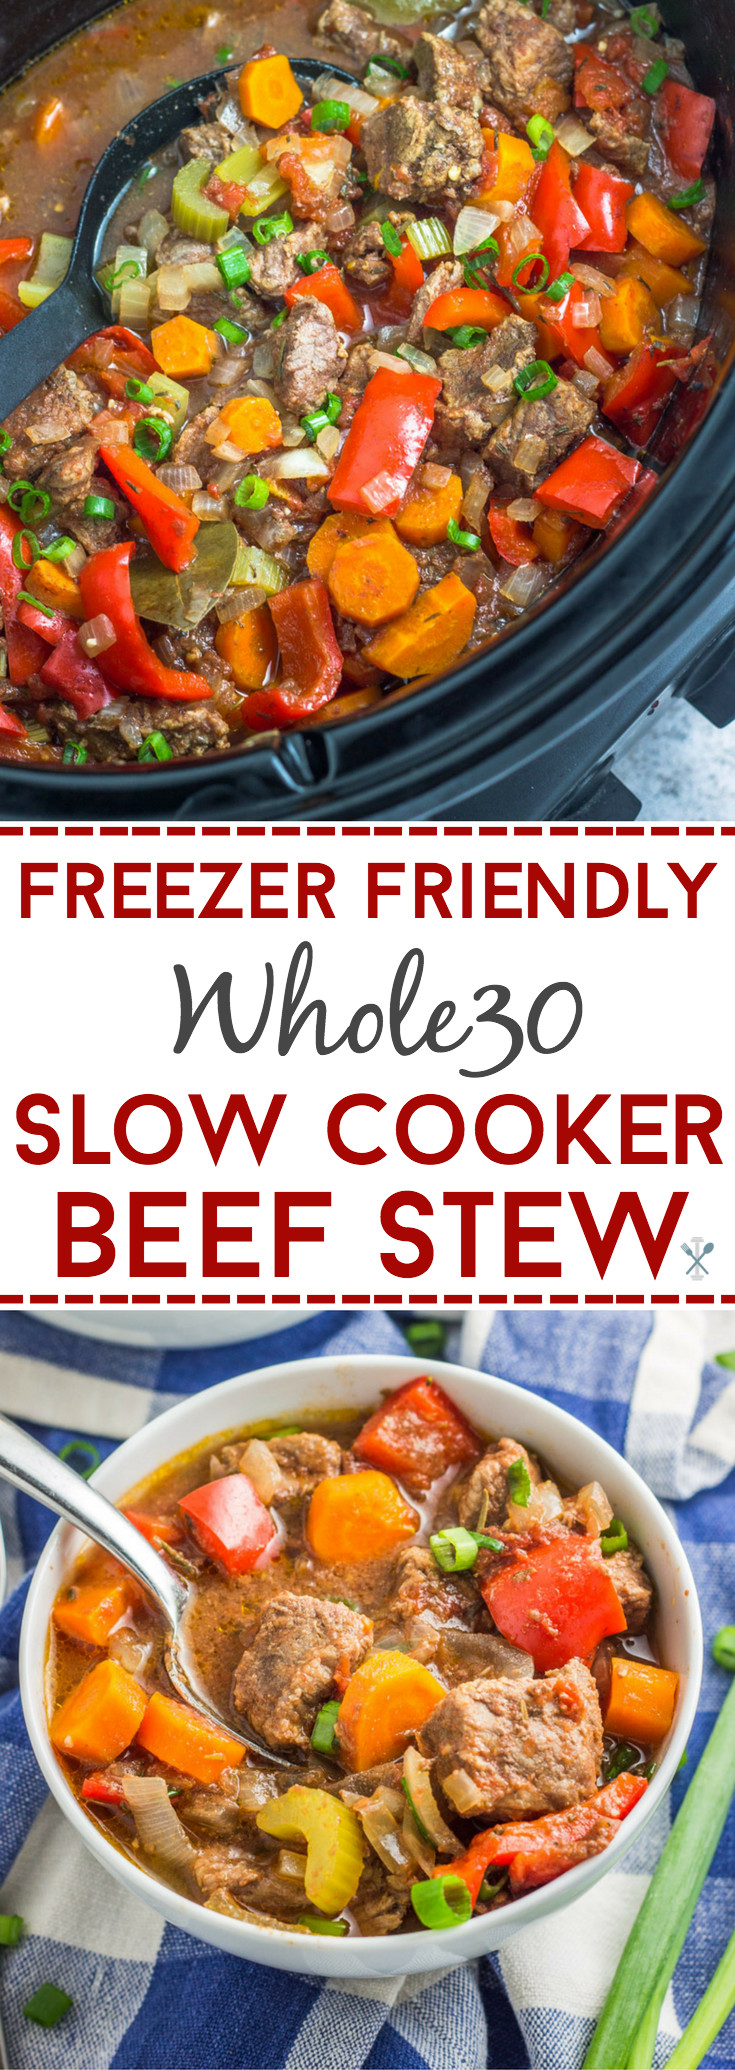 Beef Stew Freezer Meal
 Freezer Friendly Whole30 Slow Cooker Beef Stew